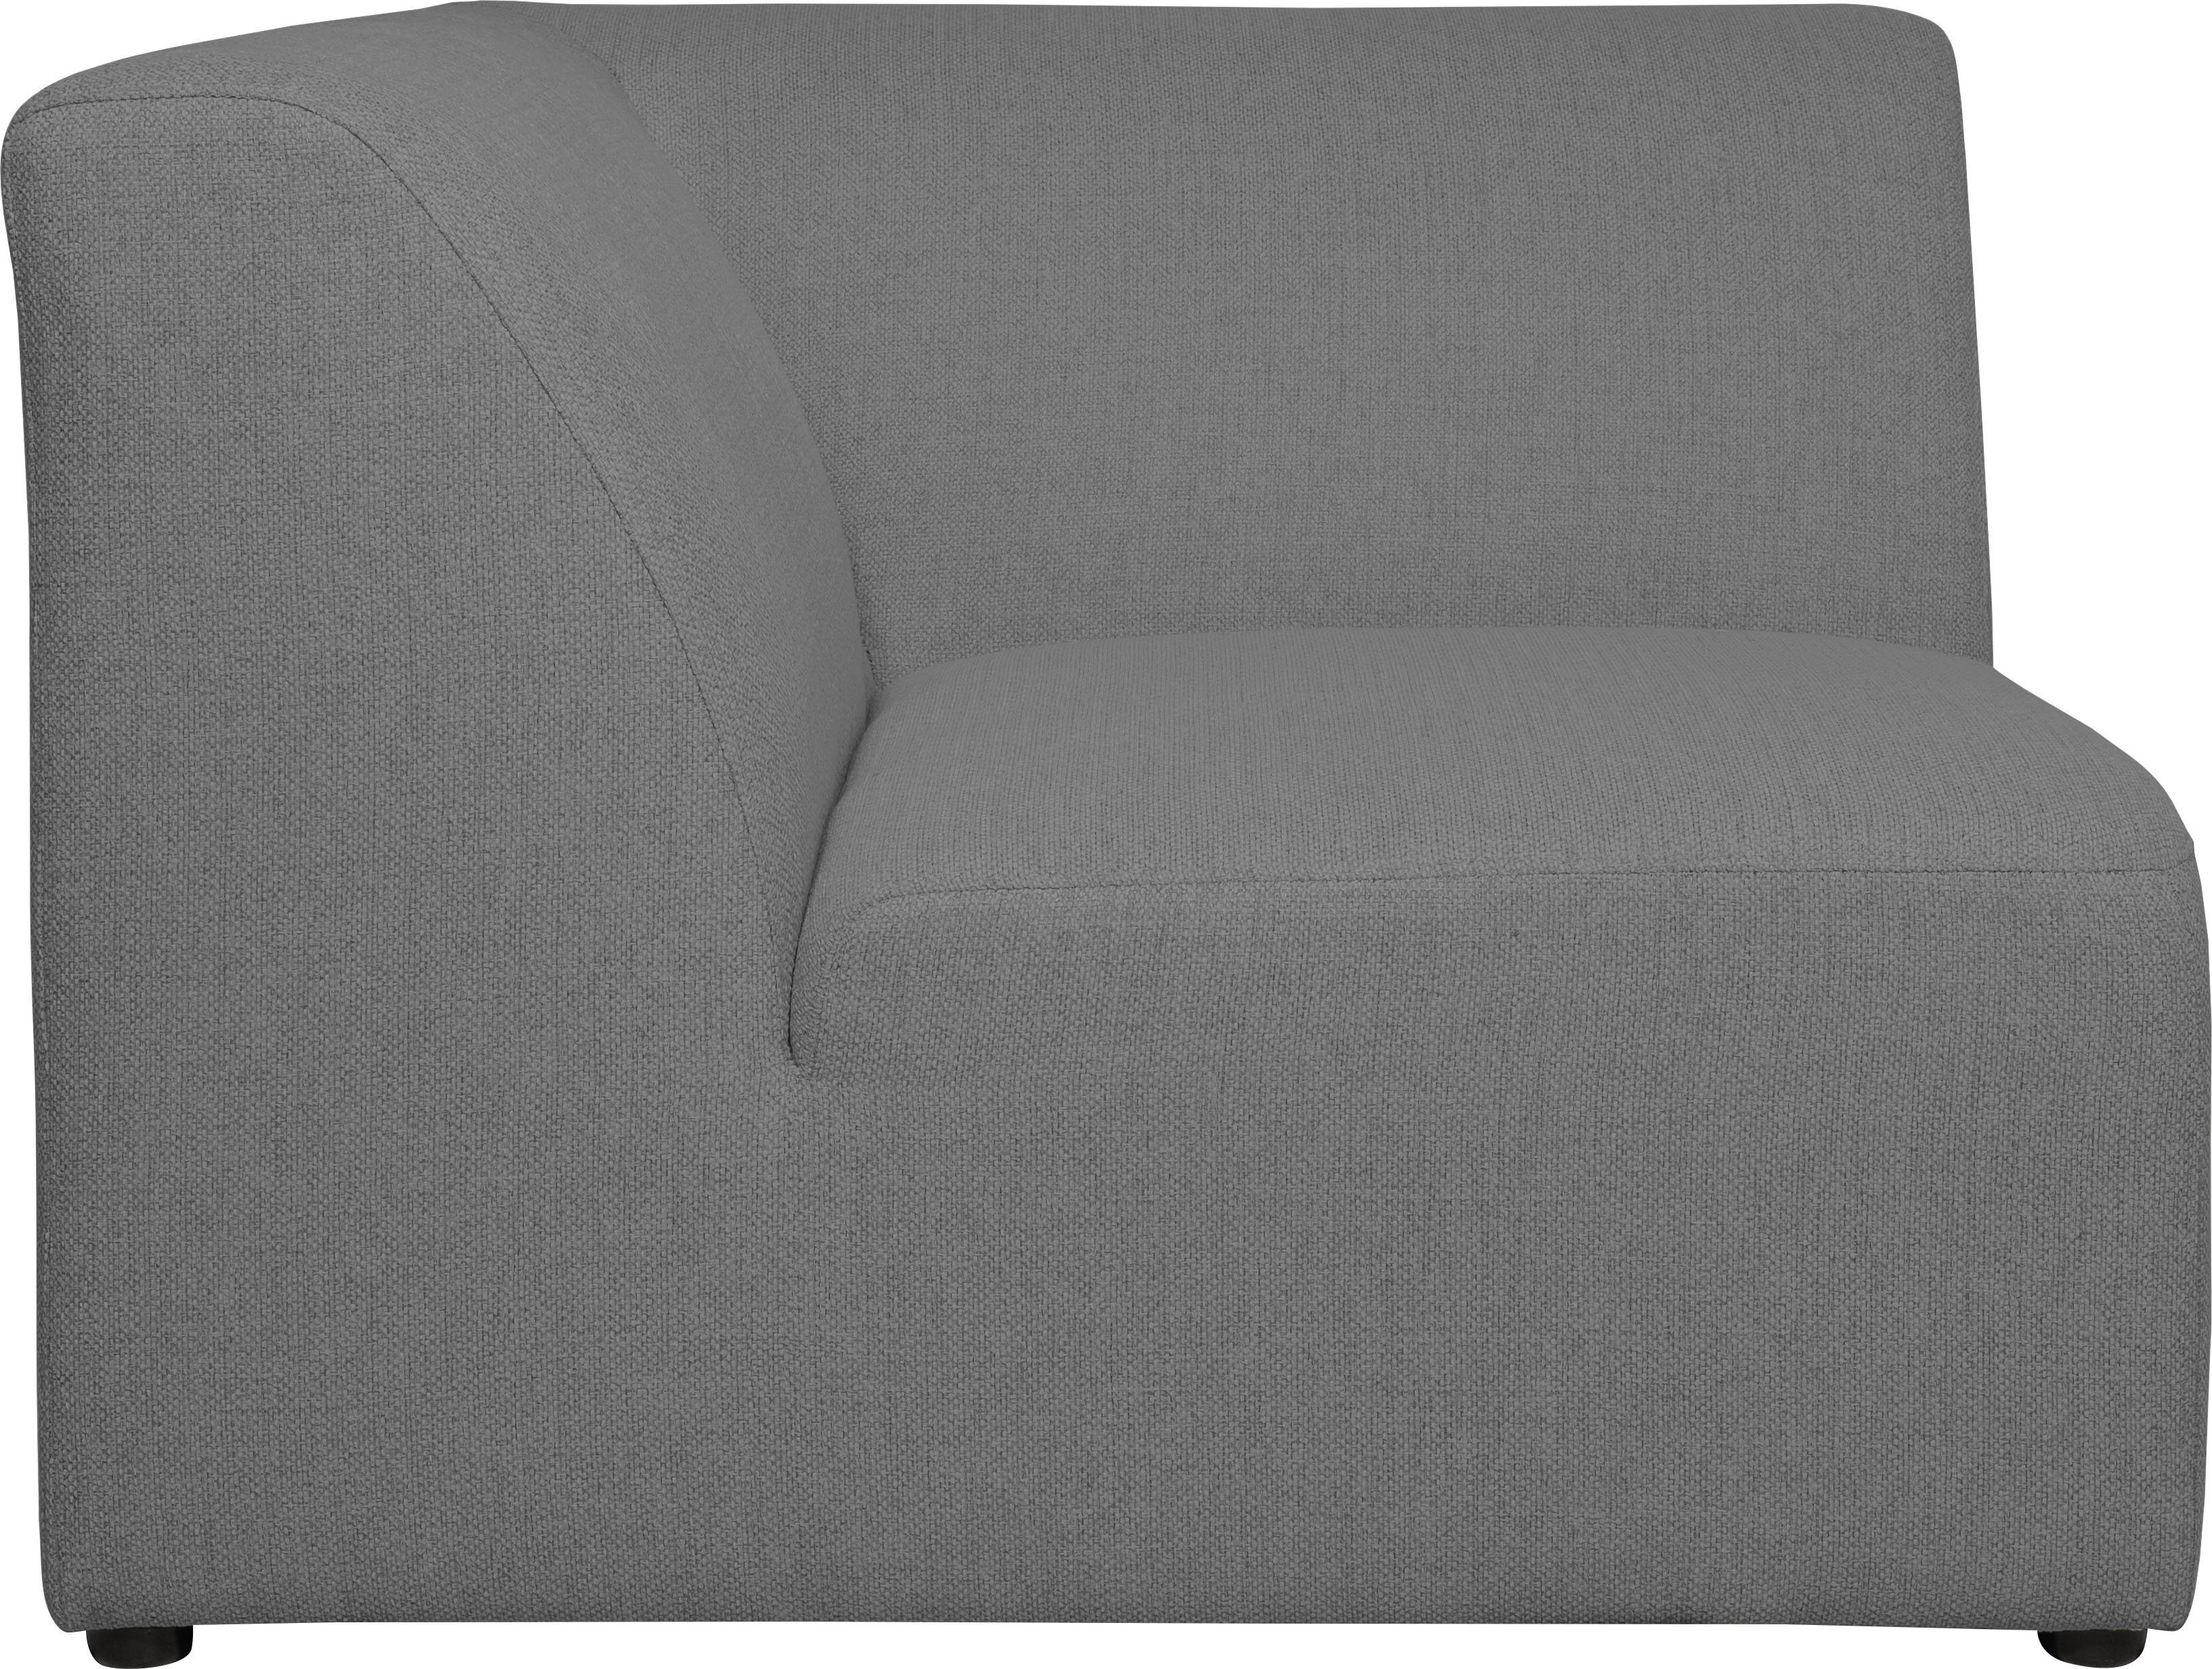 Sofa-Eckelement Proportionen angenehmer INOSIGN Koa, schöne Komfort, grey